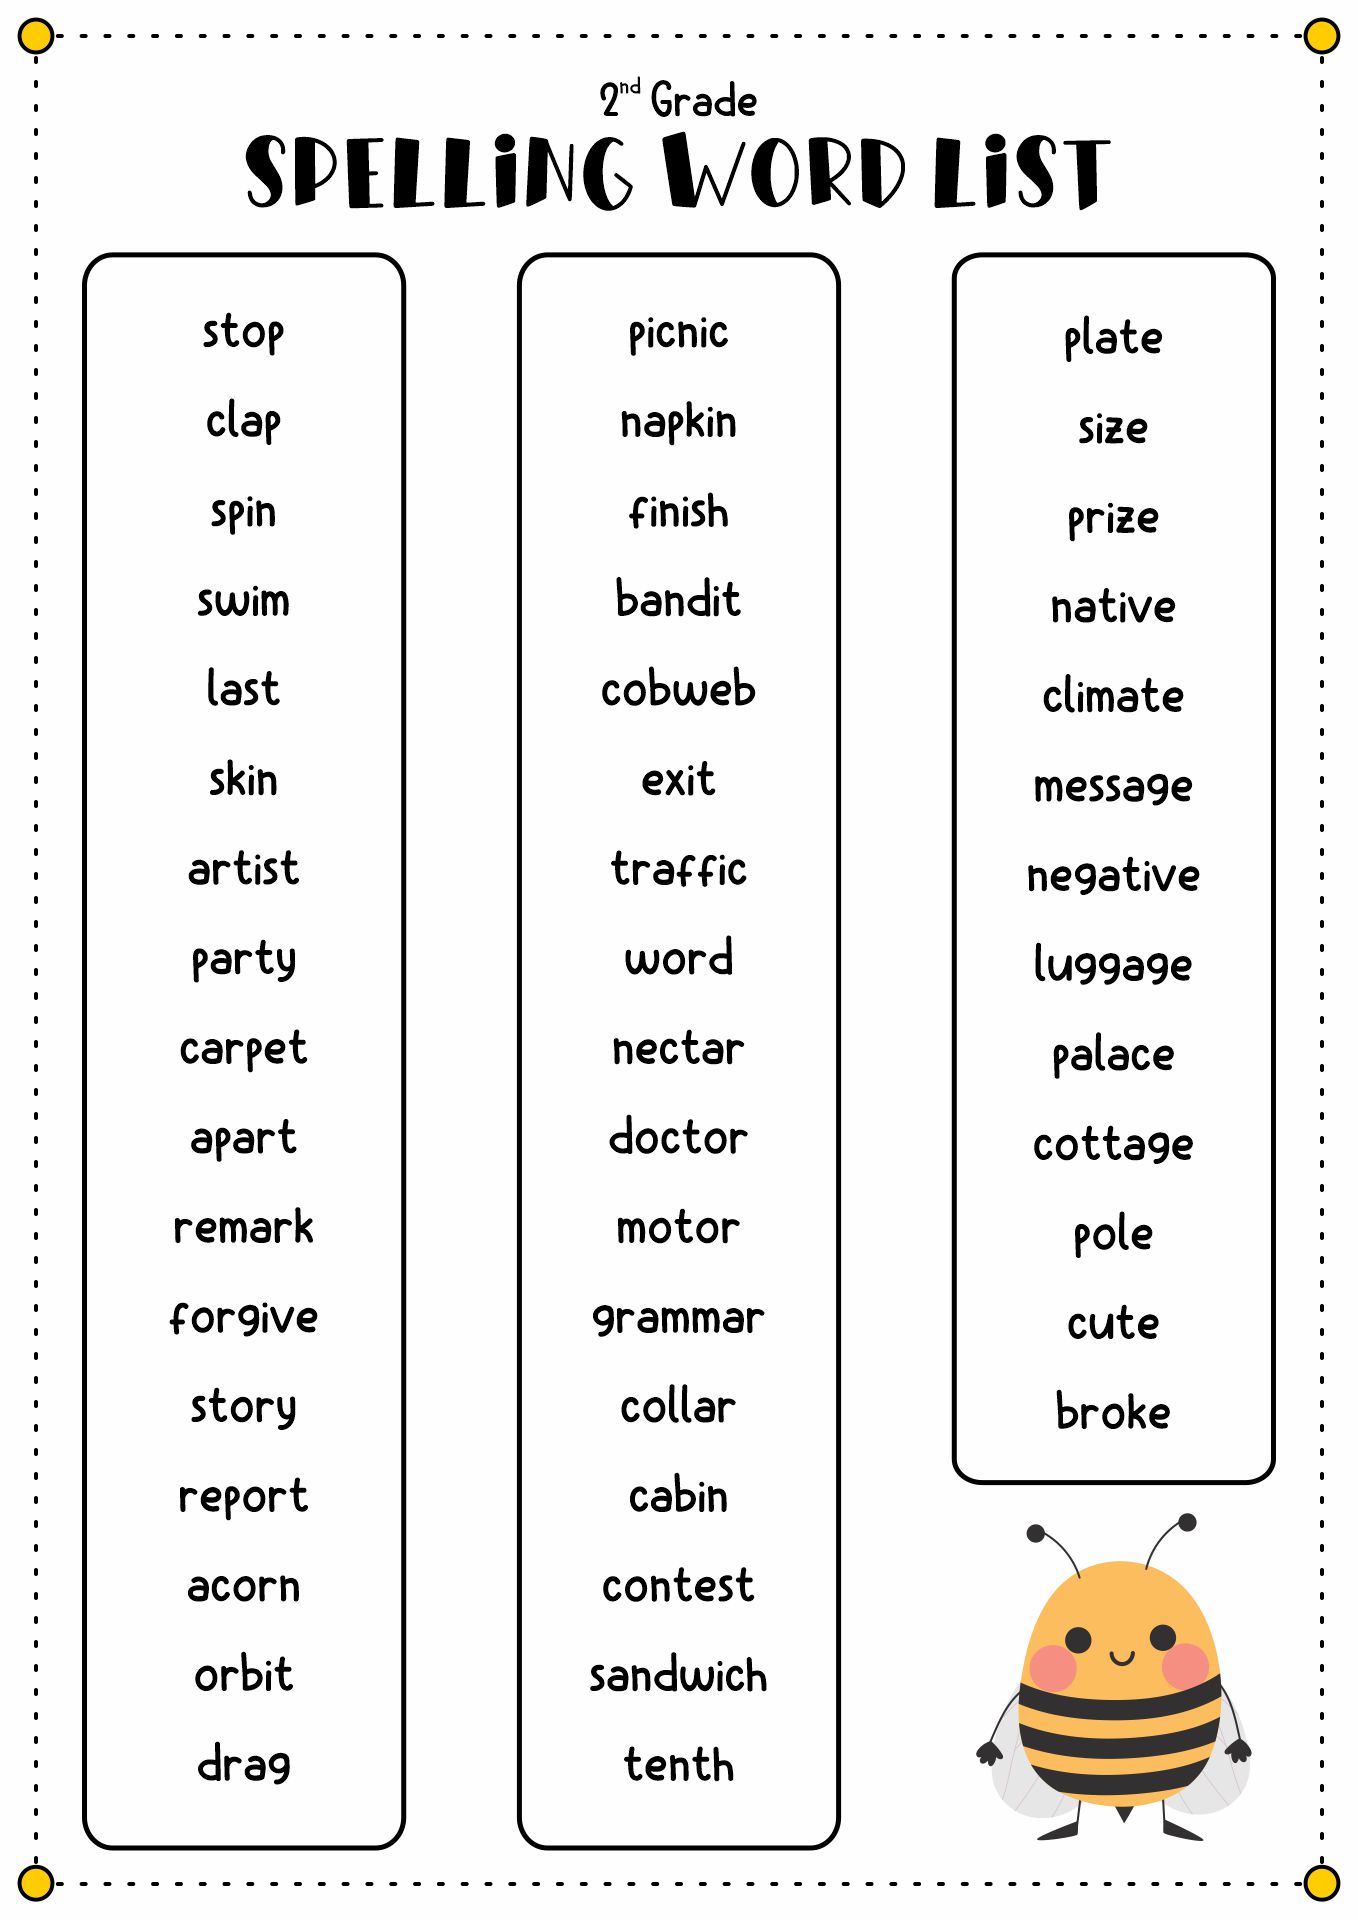 15 Best Images Of Spelling Words Worksheets Grade 2 2 Grade Spelling Words Worksheets 2nd 